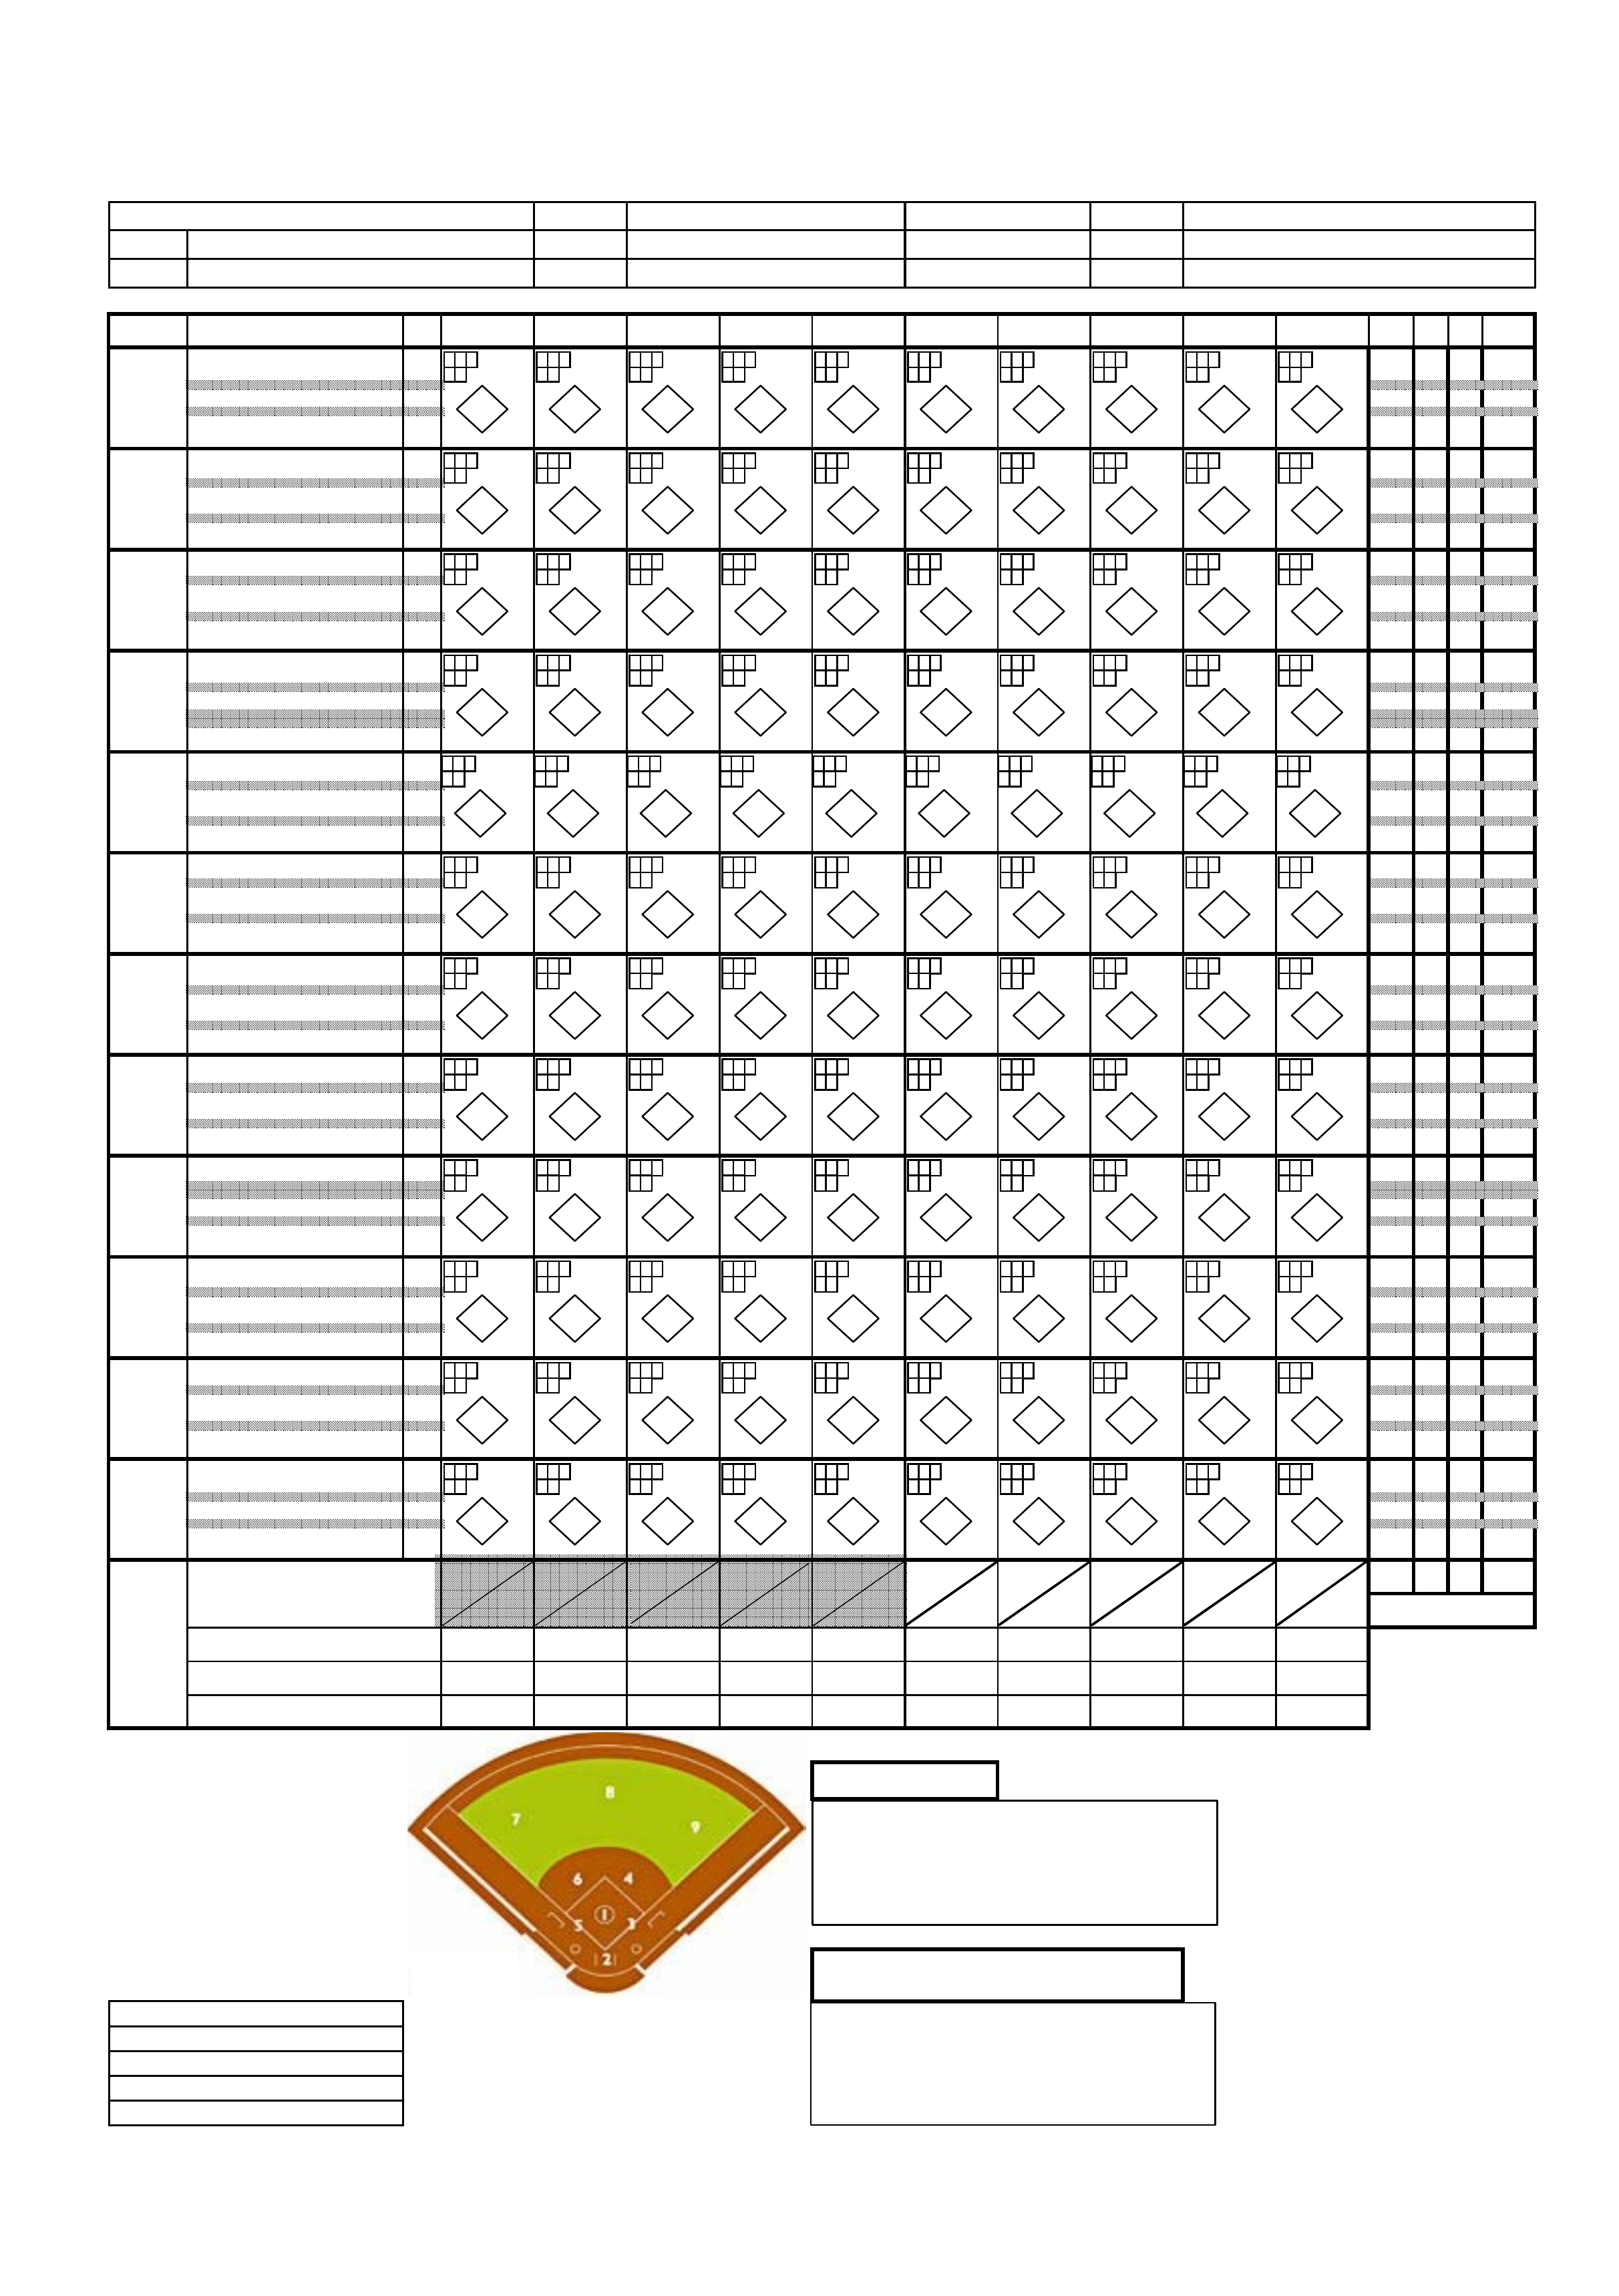 Softball Score Sheet Example Free Download Free Printable Softball